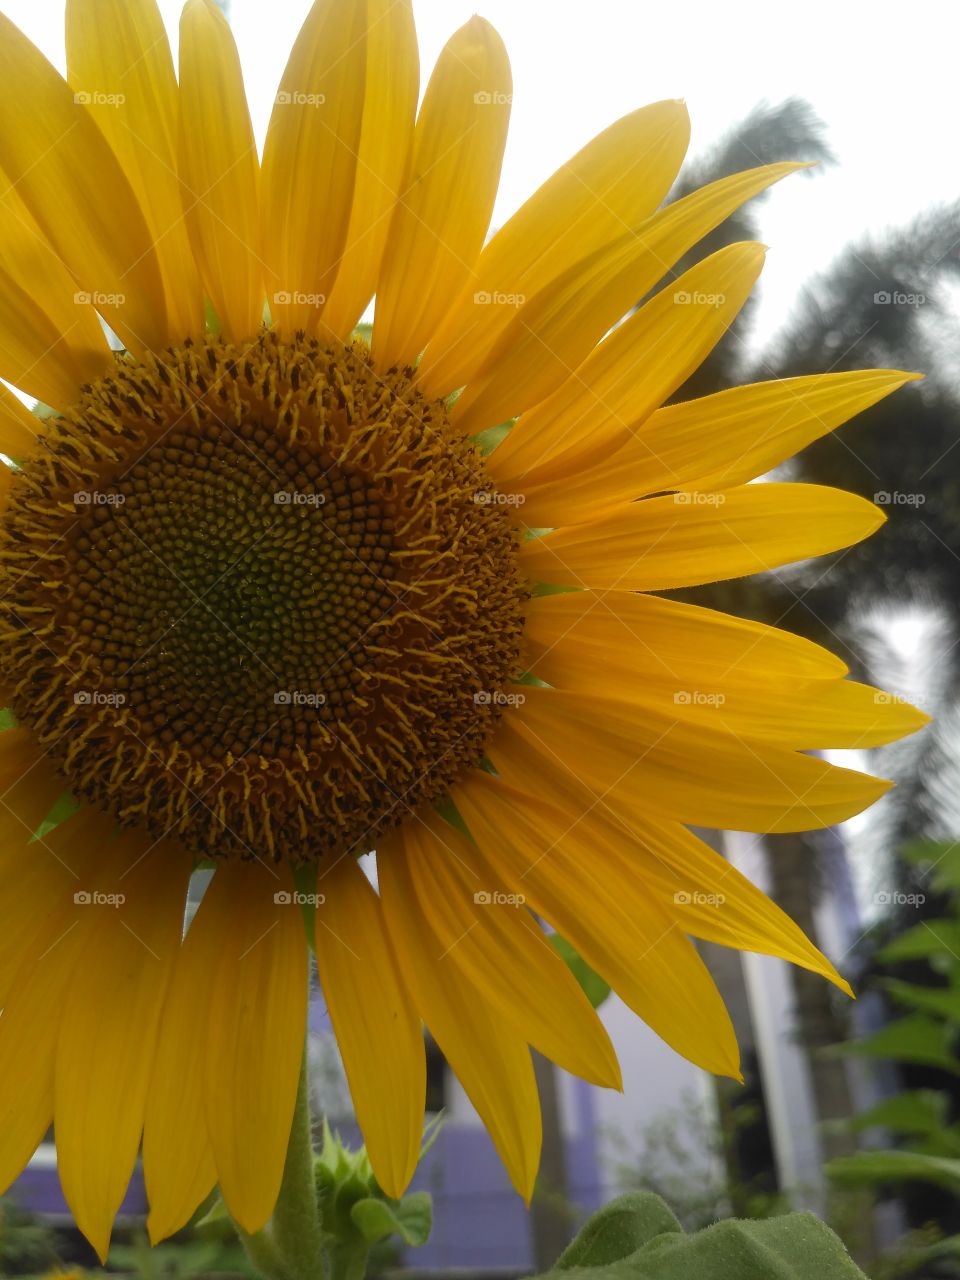 Photograpy macro of sunflower